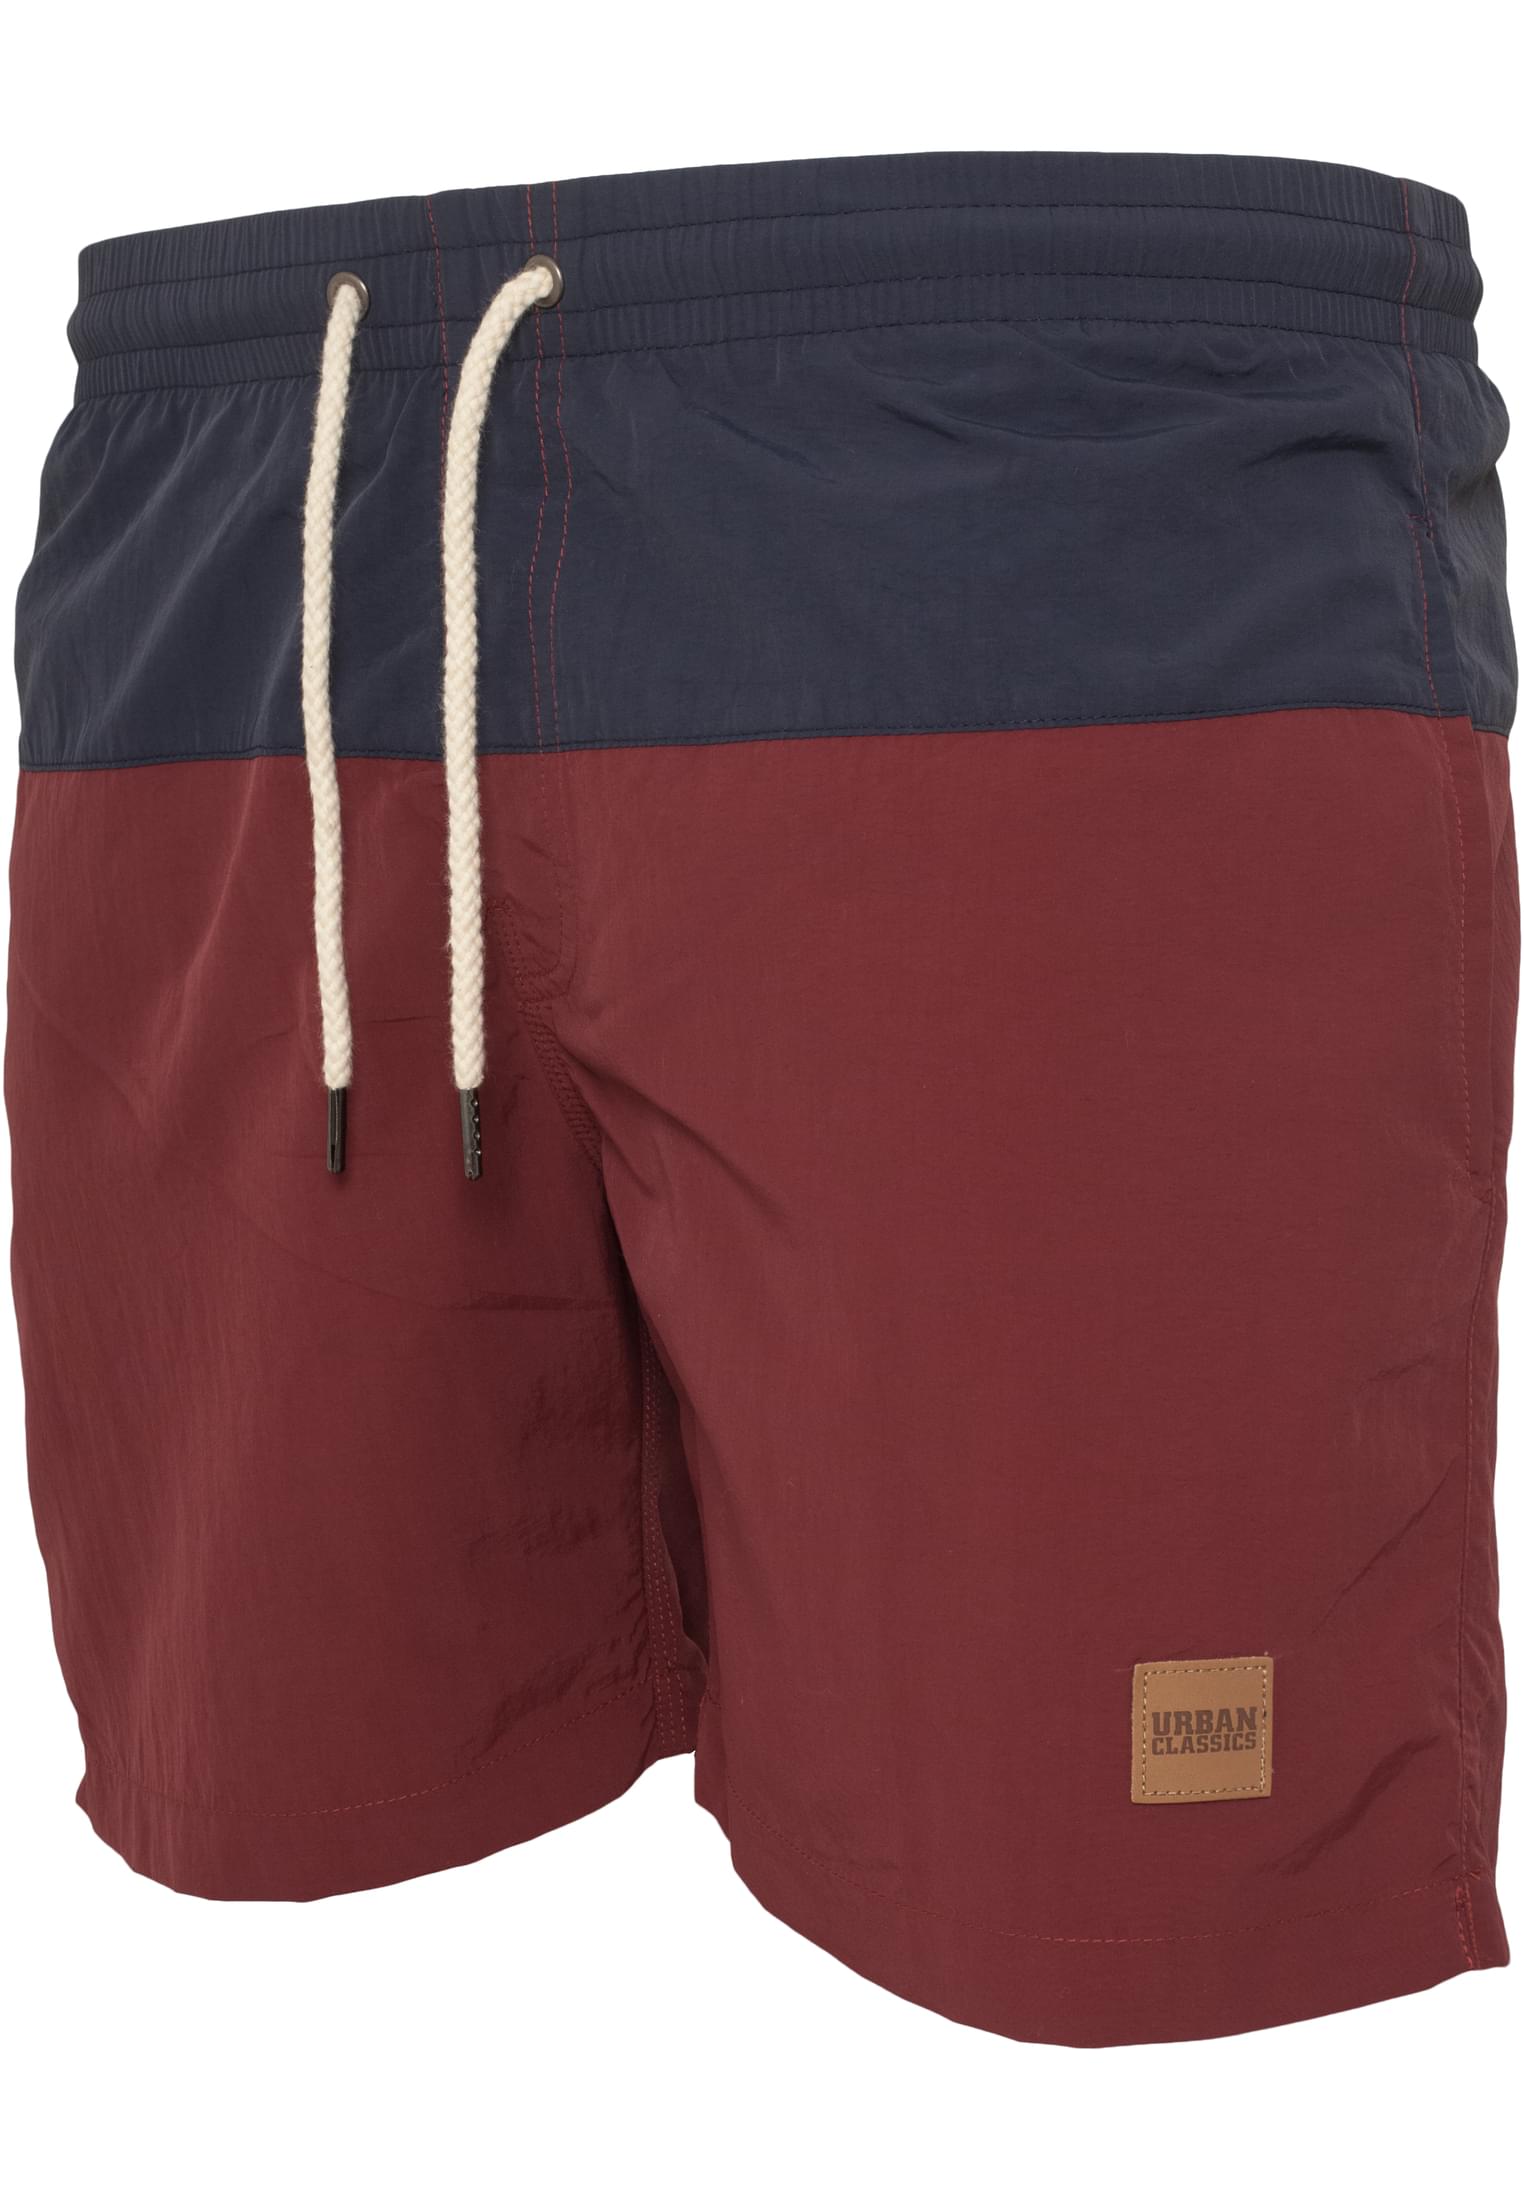 Plus Size Block Swim Shorts in Farbe nvy/burgundy